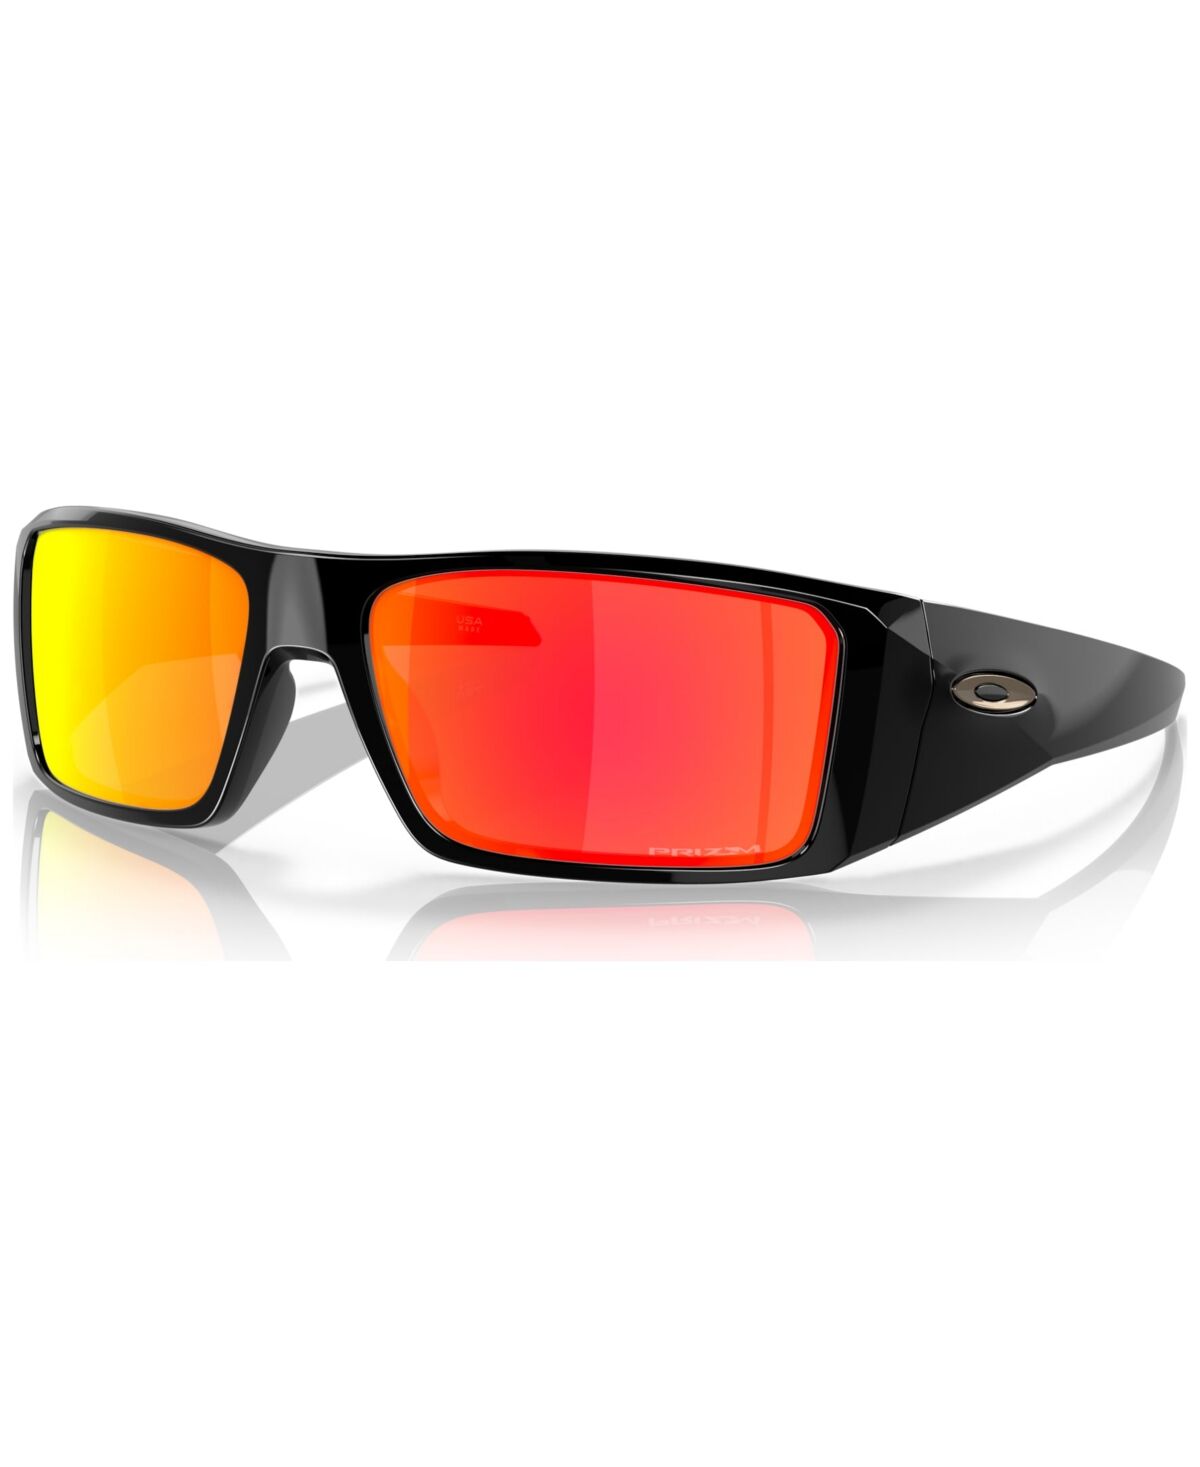 Oakley Men's Sunglasses, Heliostat - Polished Black